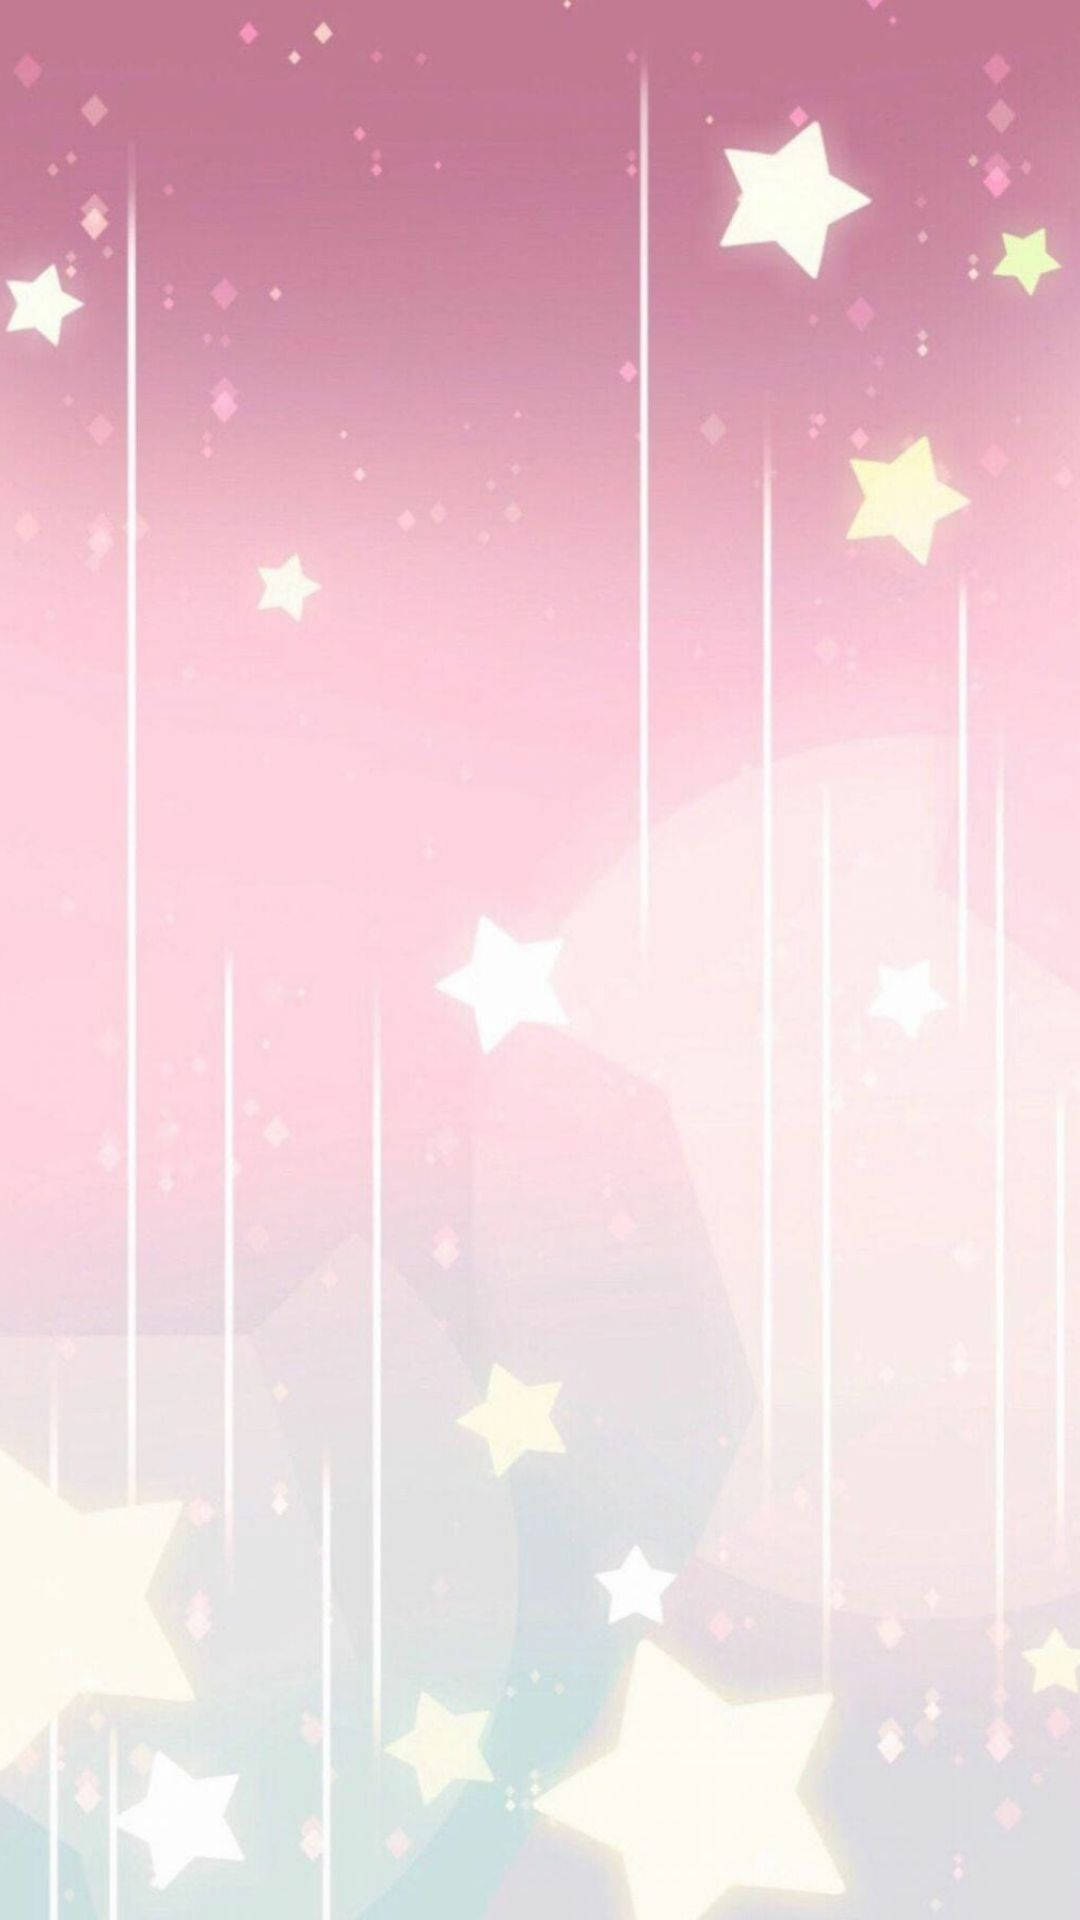 Falling Stars In Aesthetic Pink Sky Wallpaper